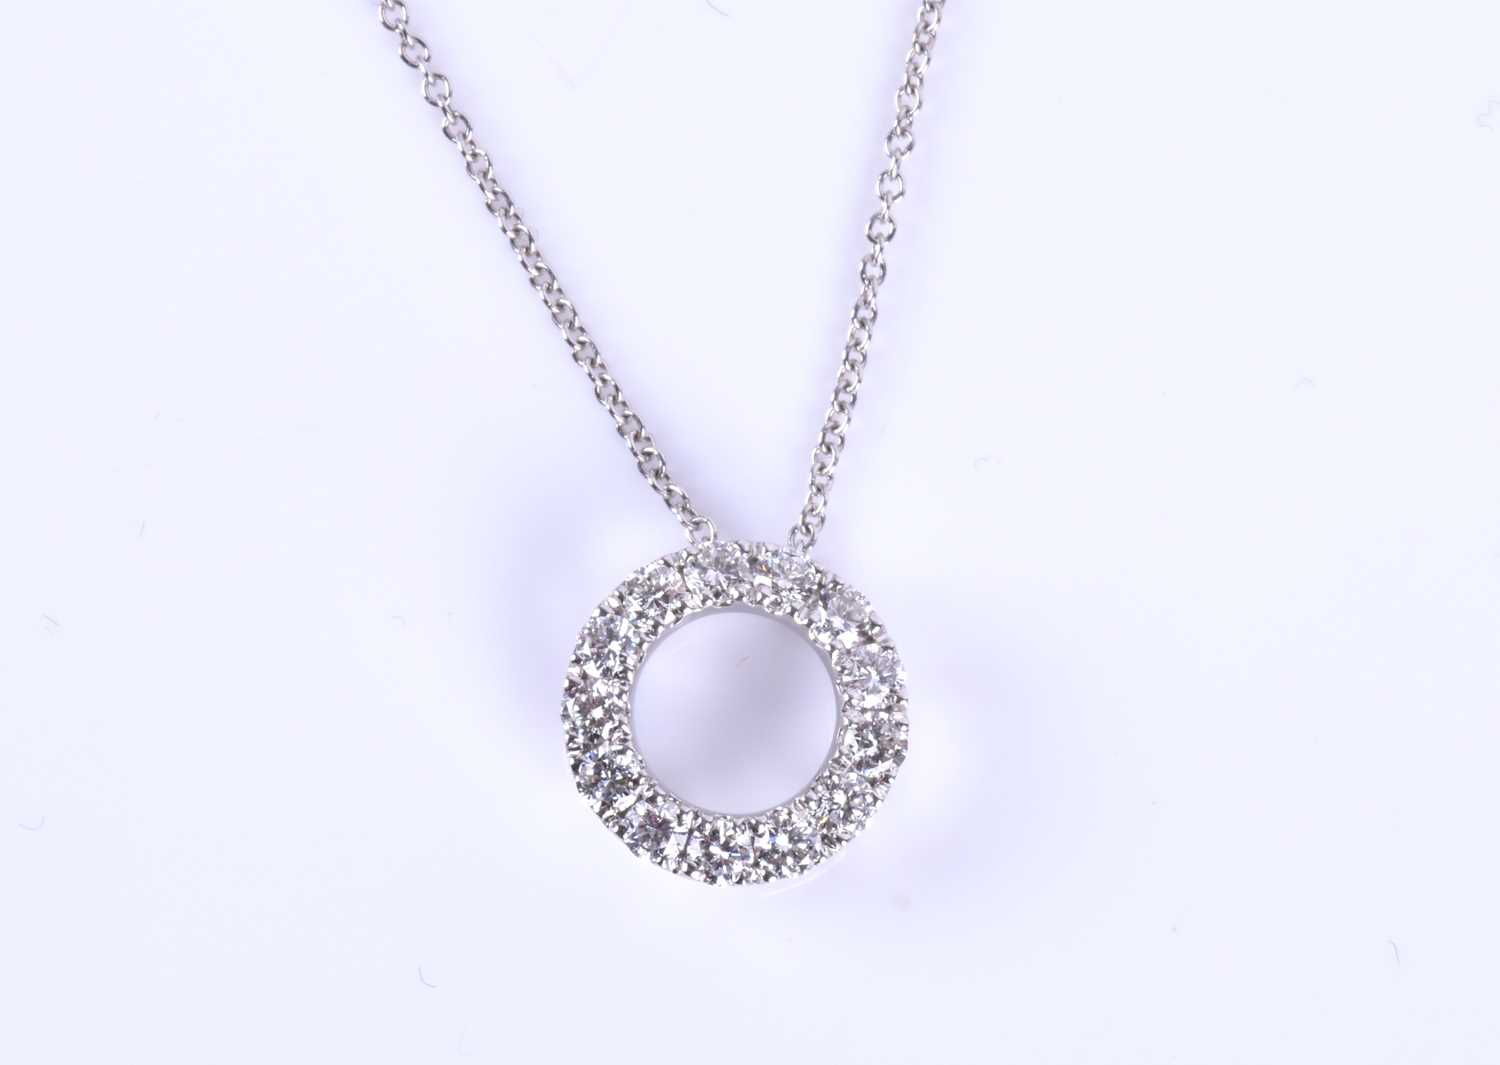 An 18ct white gold and diamond circular pendant, set with round brilliant-cut diamonds, pendant